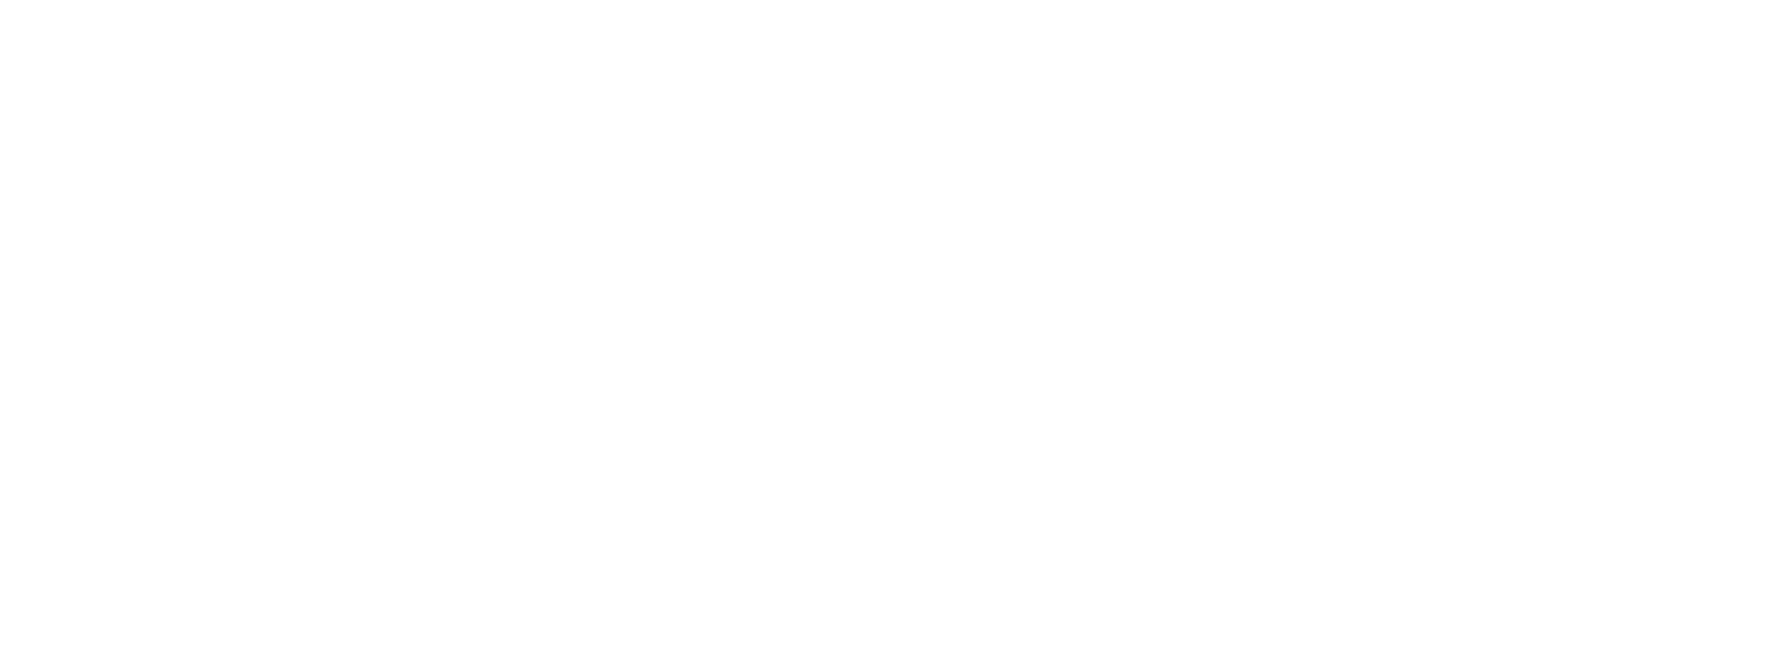 Lofty Farbiarnia